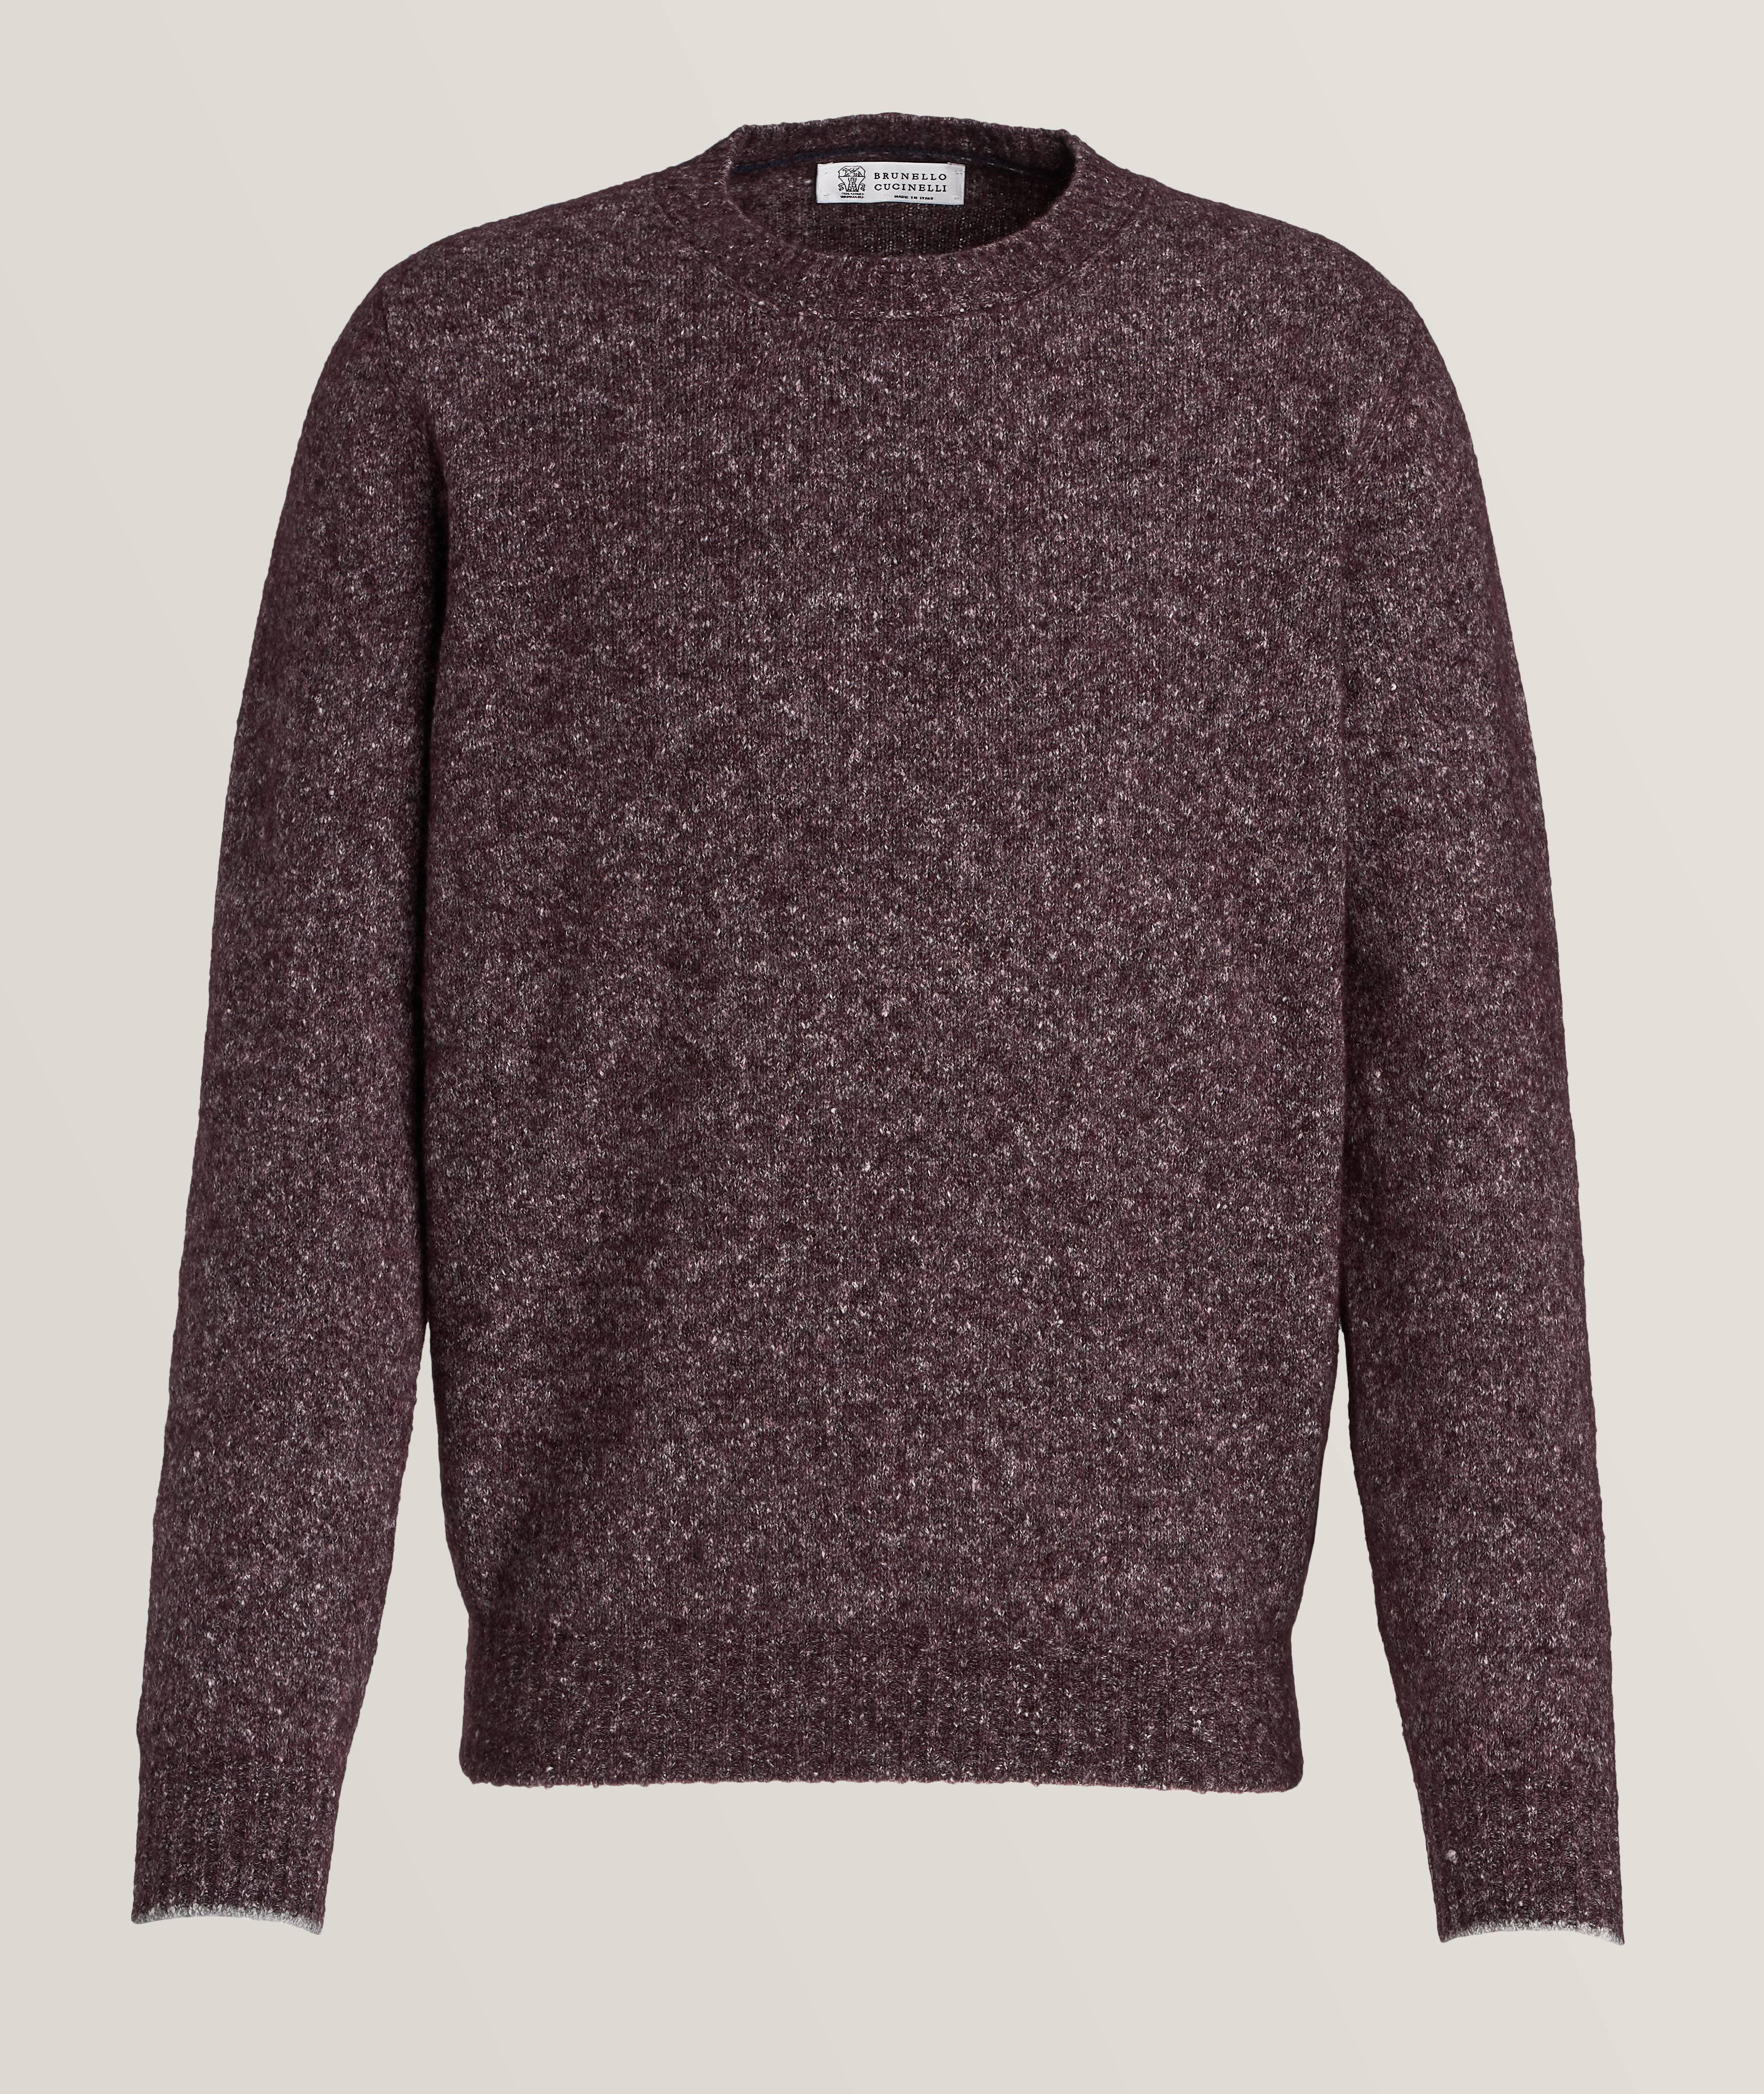 Mélange Alpaca Wool-Cotton Sweater image 0